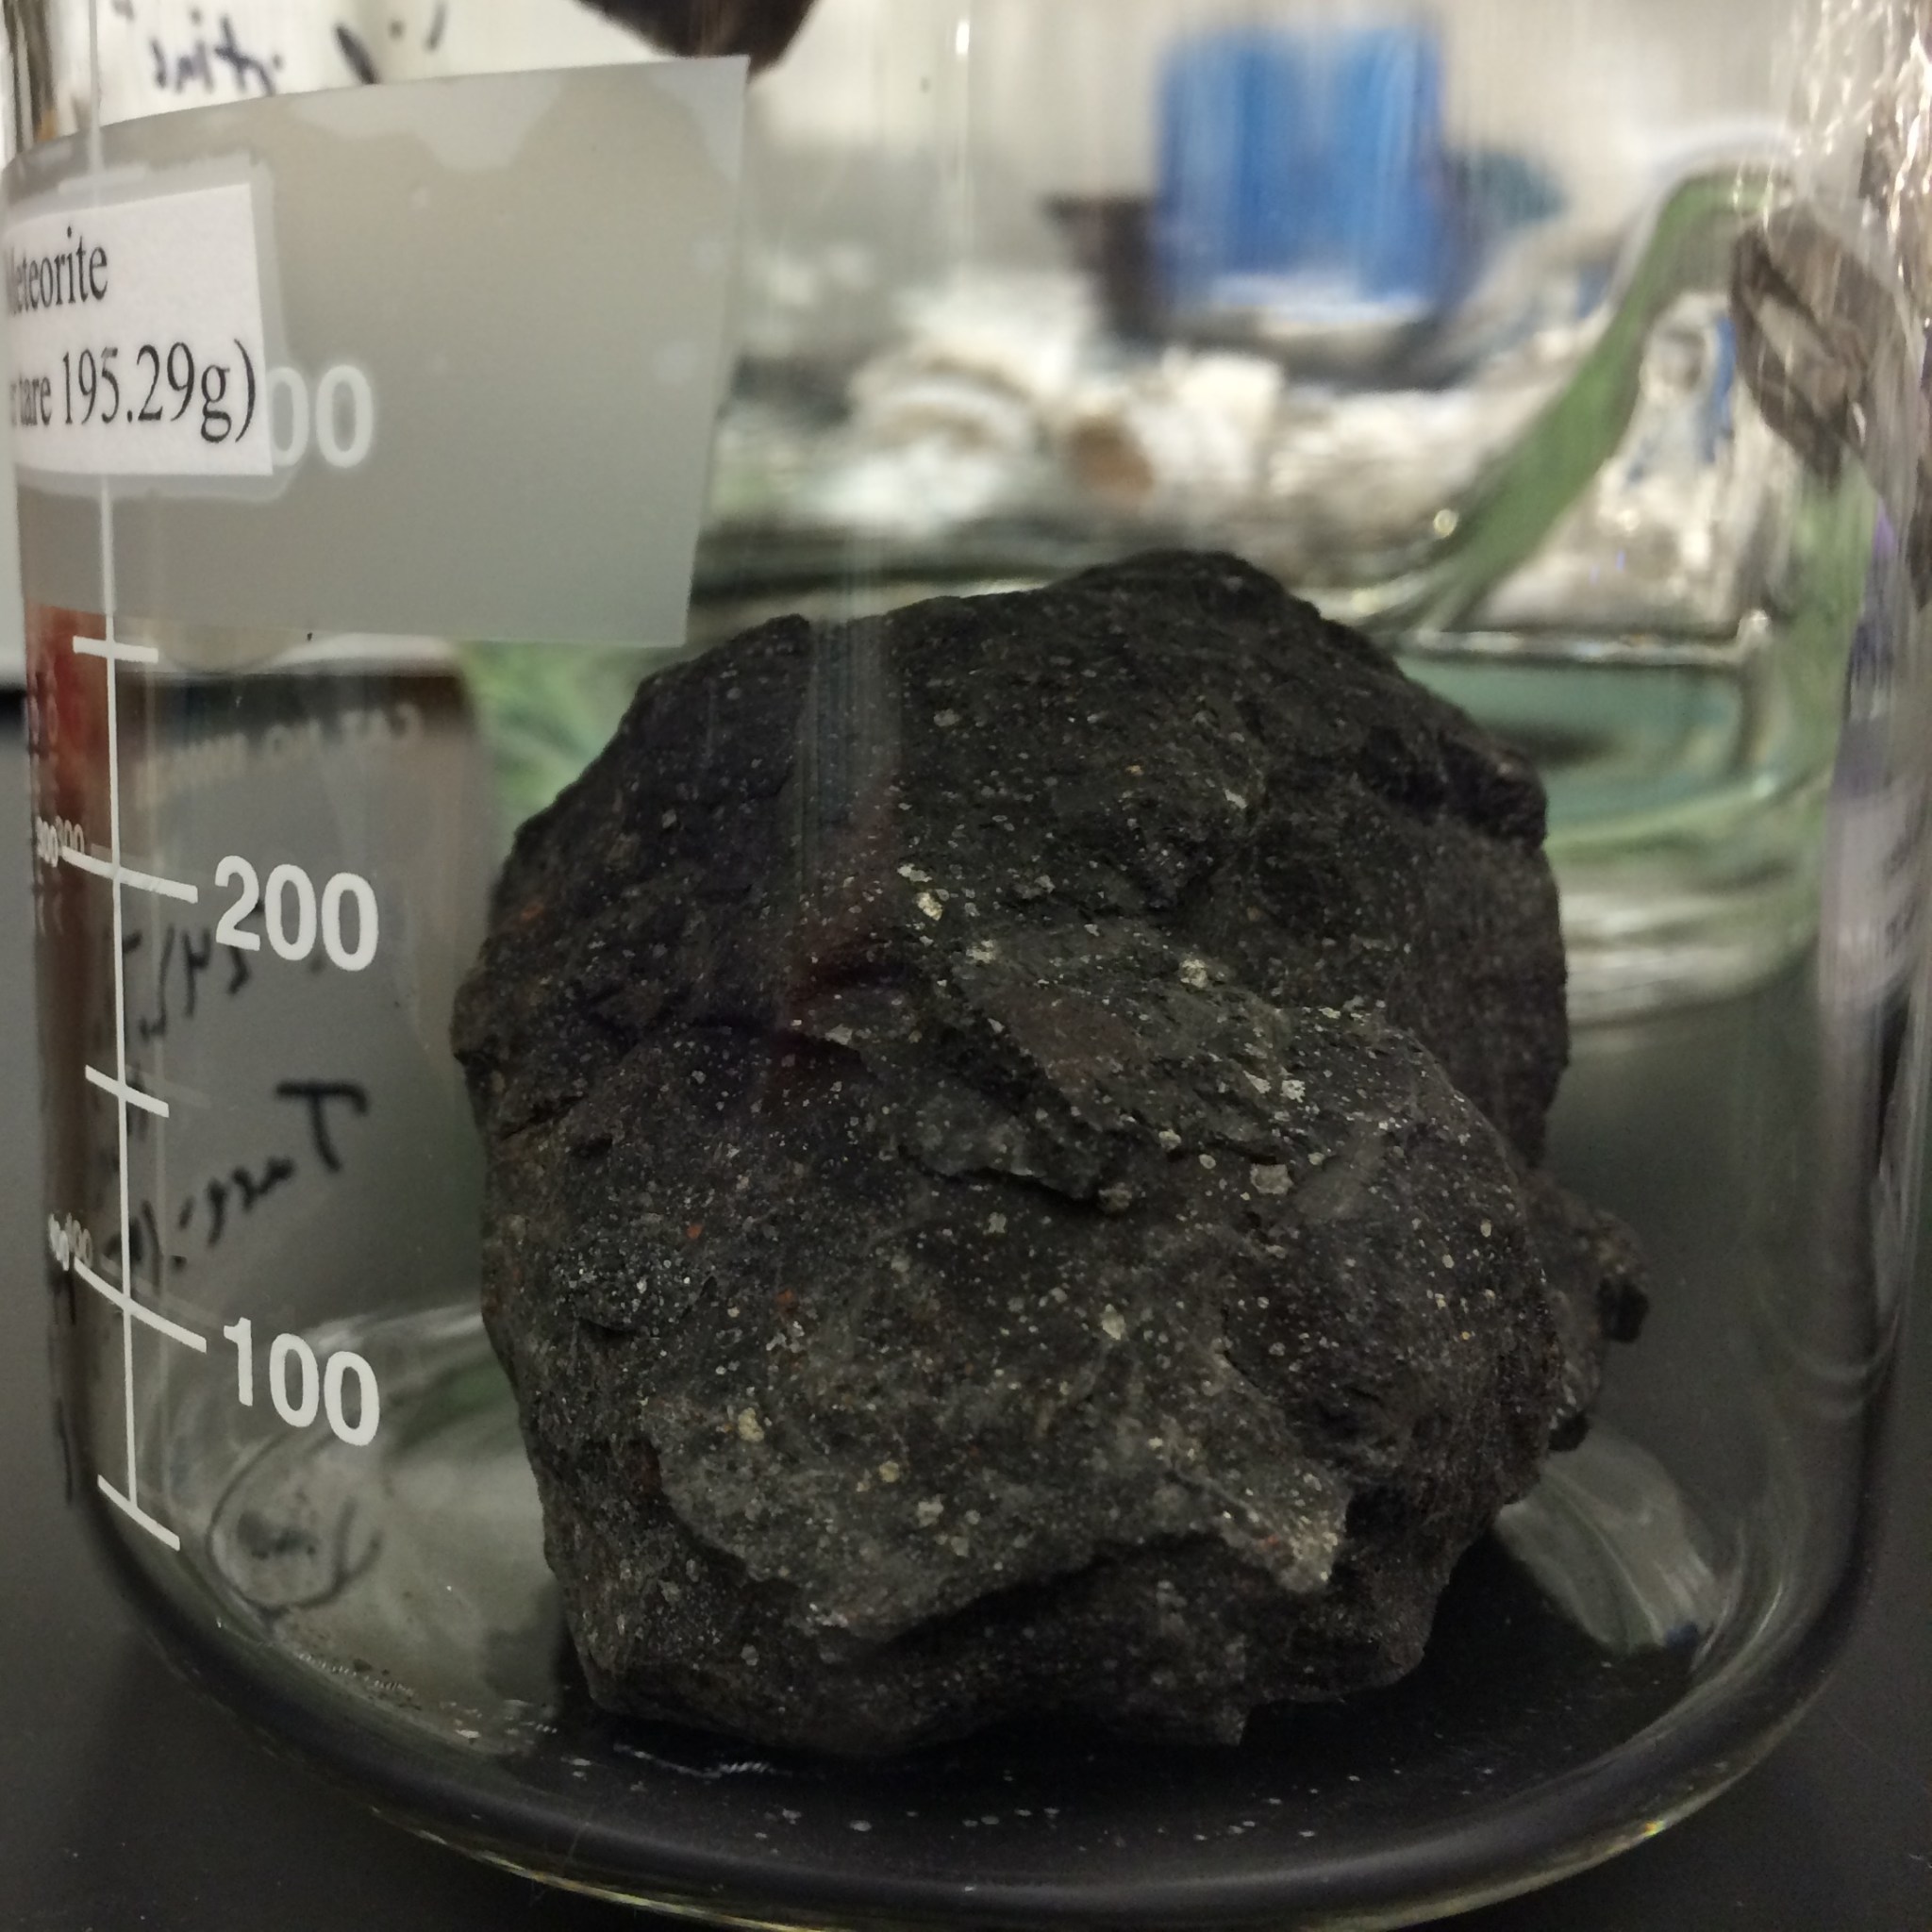 One piece of the Murchison meteorite